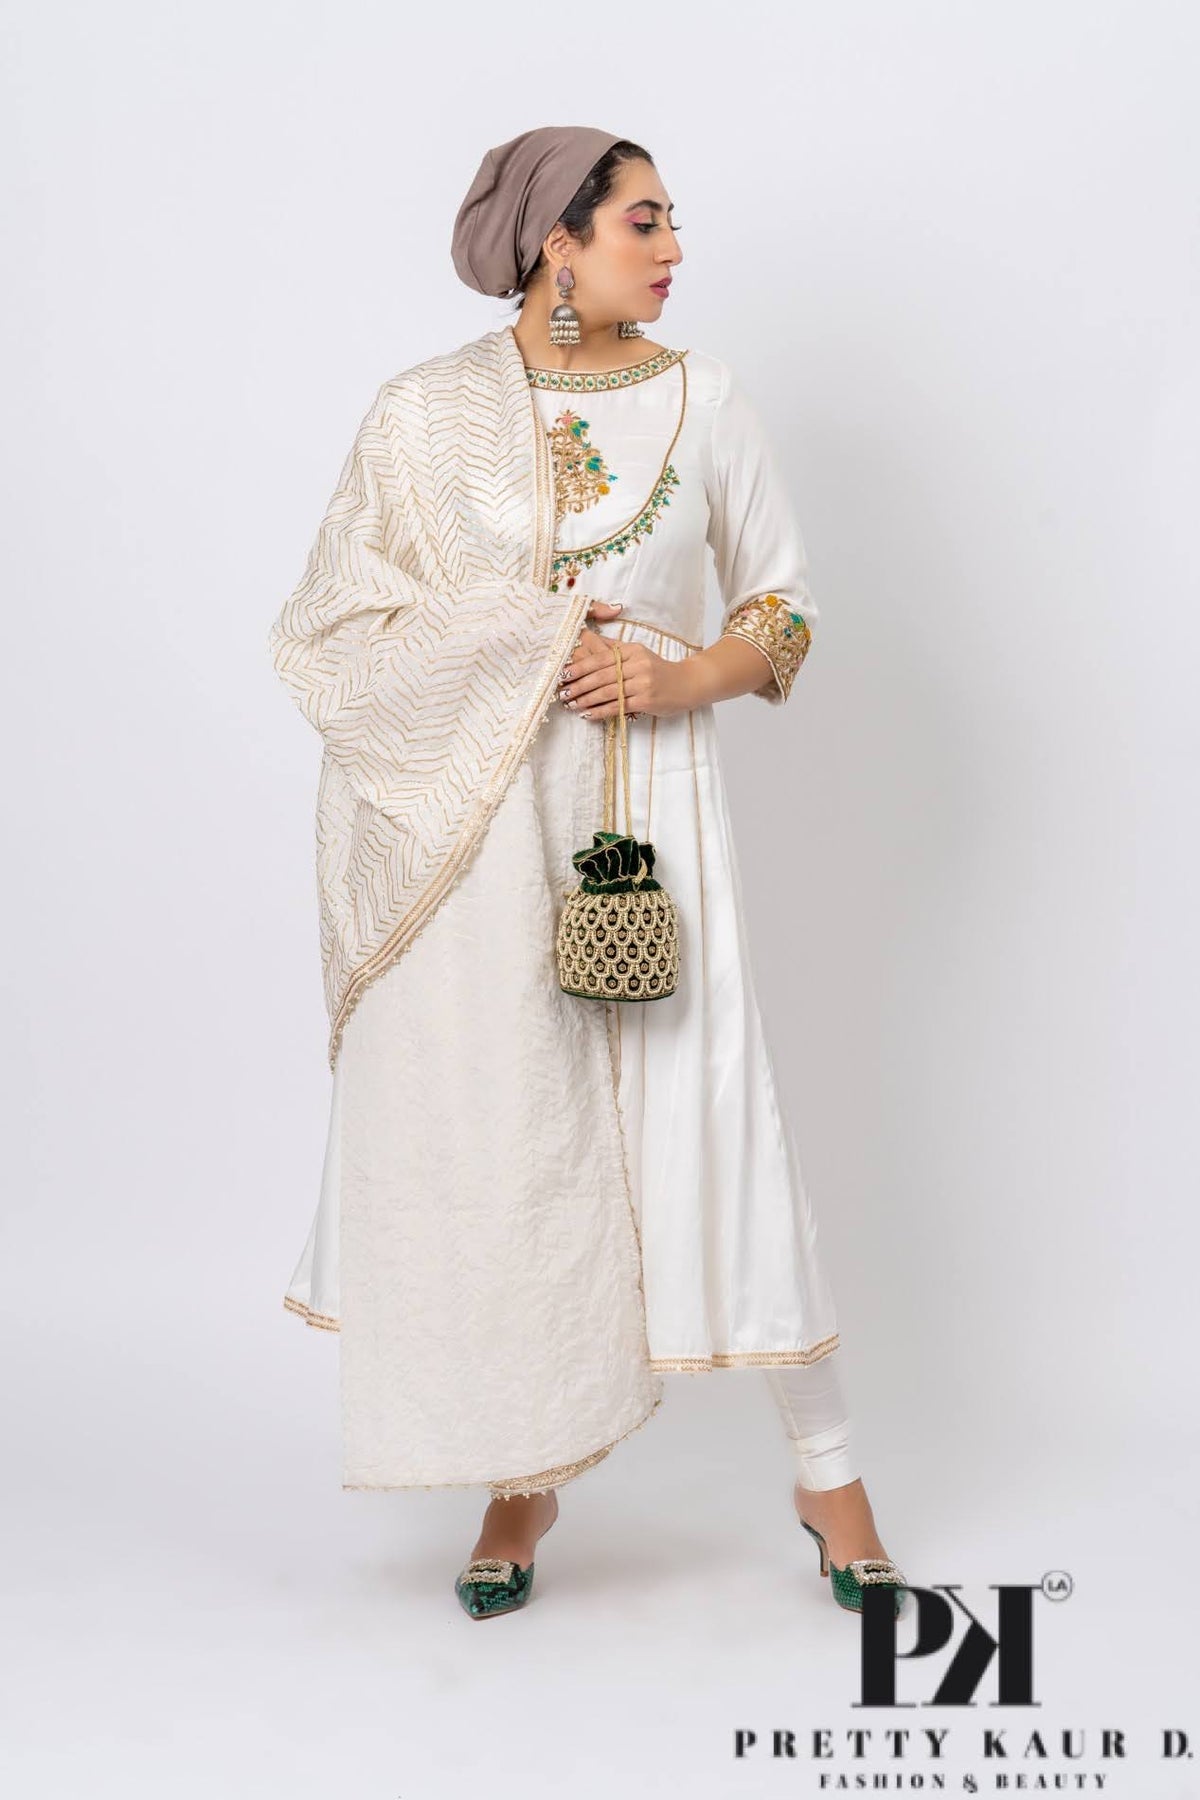  Pretty-Kaur-fashion-beauty-Punjabi-Suit-Anarkali-1